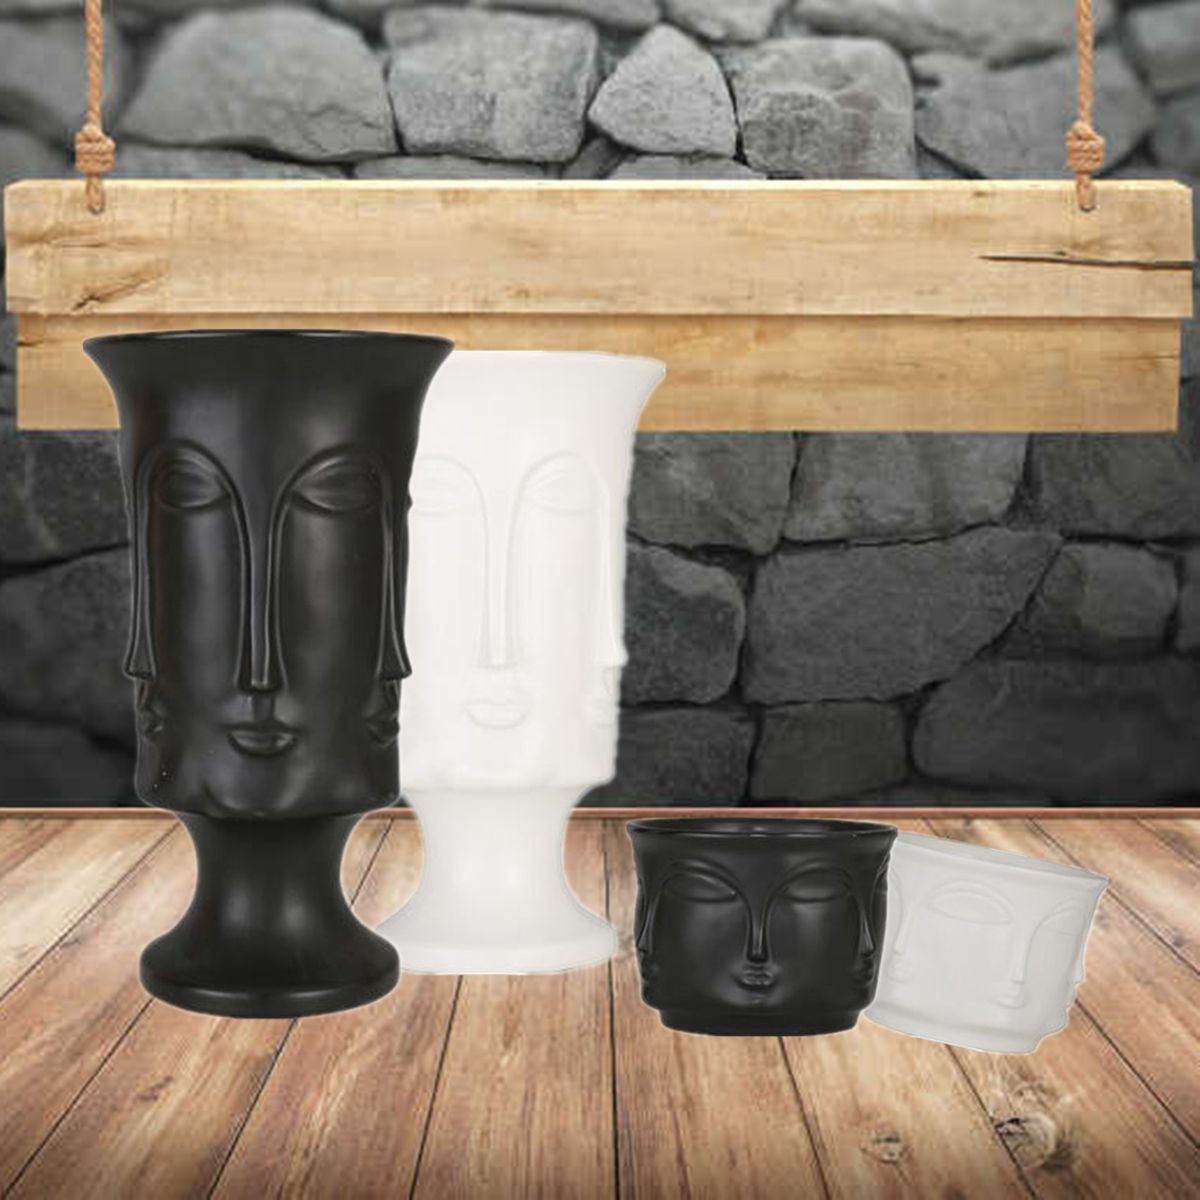 Minimalist-Artificial-Flower-Ceramic-Human-Face-Creative-Vase-Display-Room-Decorations-1473220